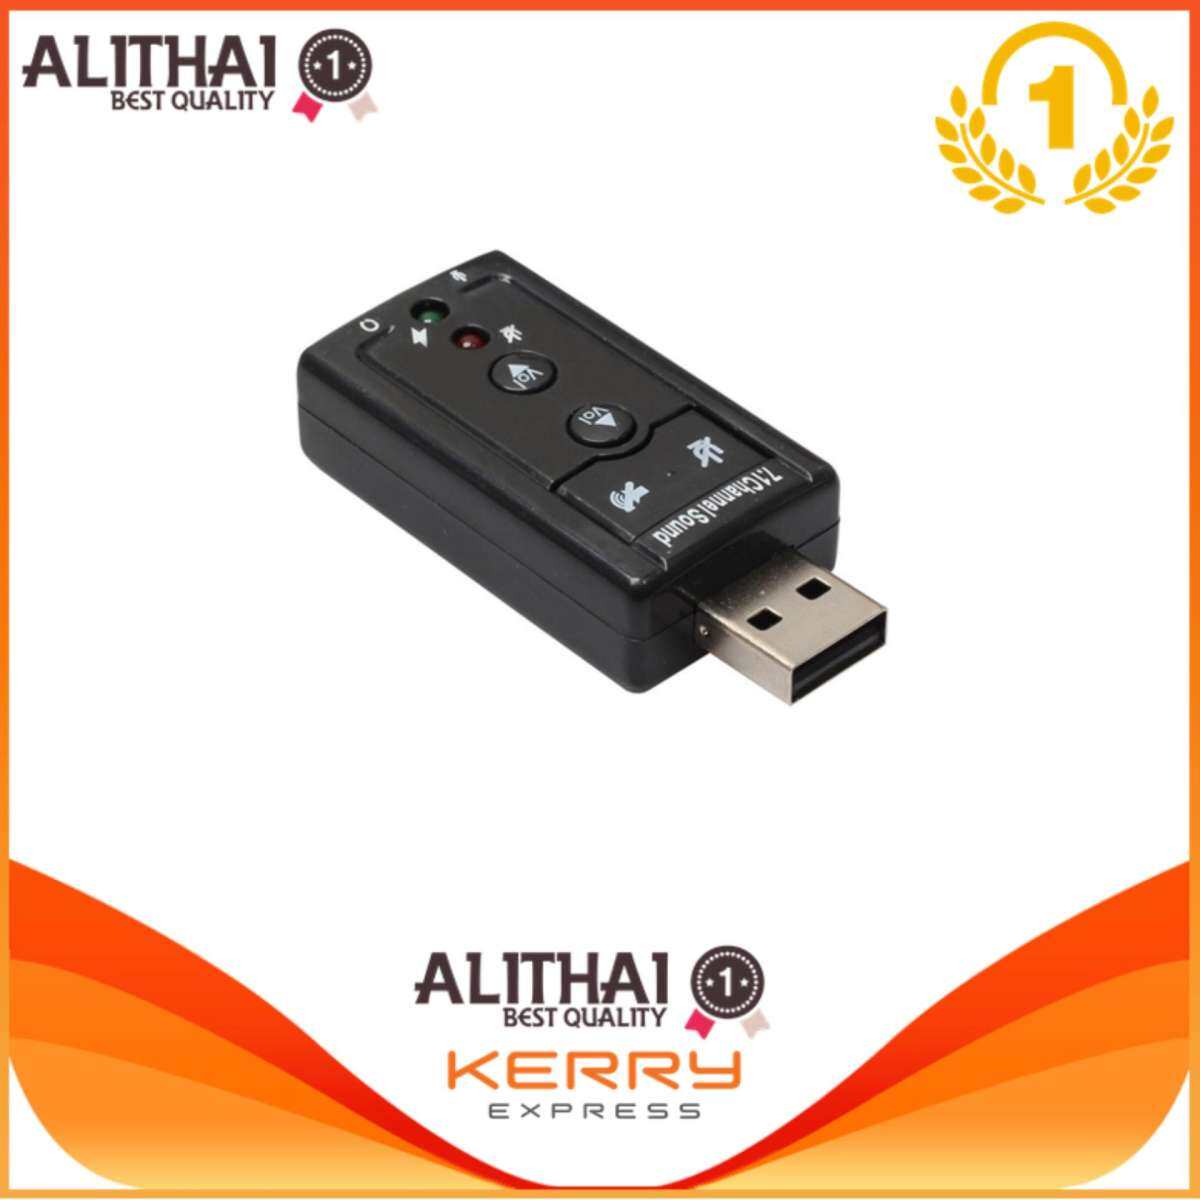 USB Sound Adapter External USB 2.0 Virtual 7.1 Channel (Black)